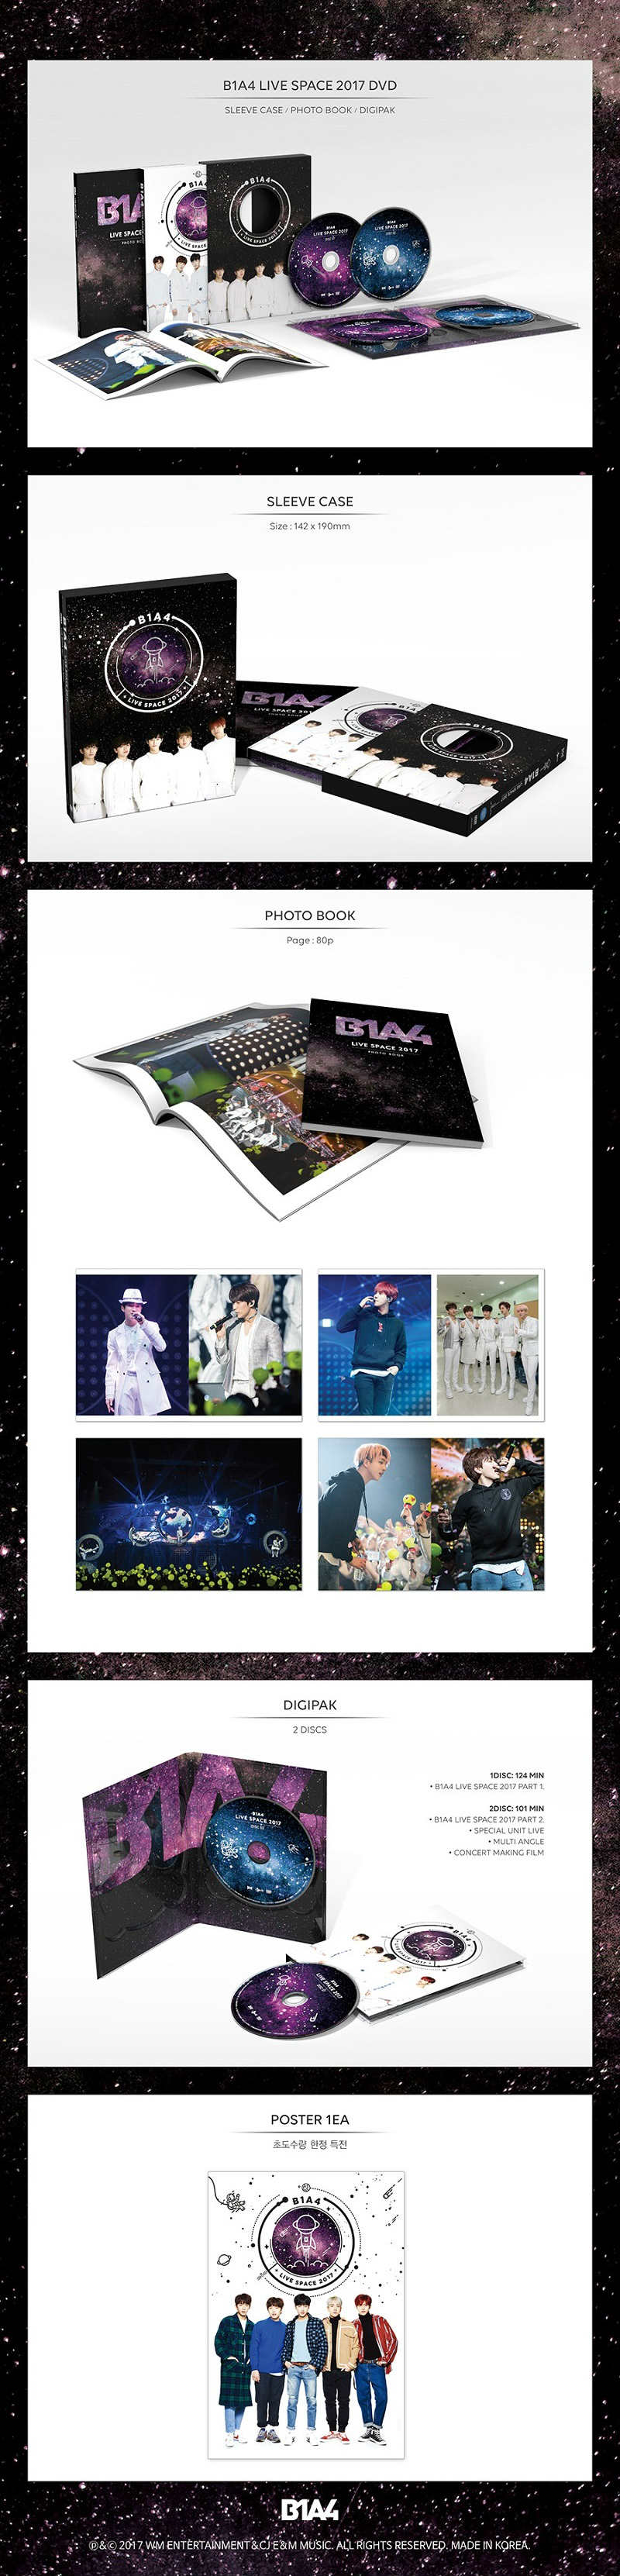 B1A4 - LIVE SPACE 2017 DVD